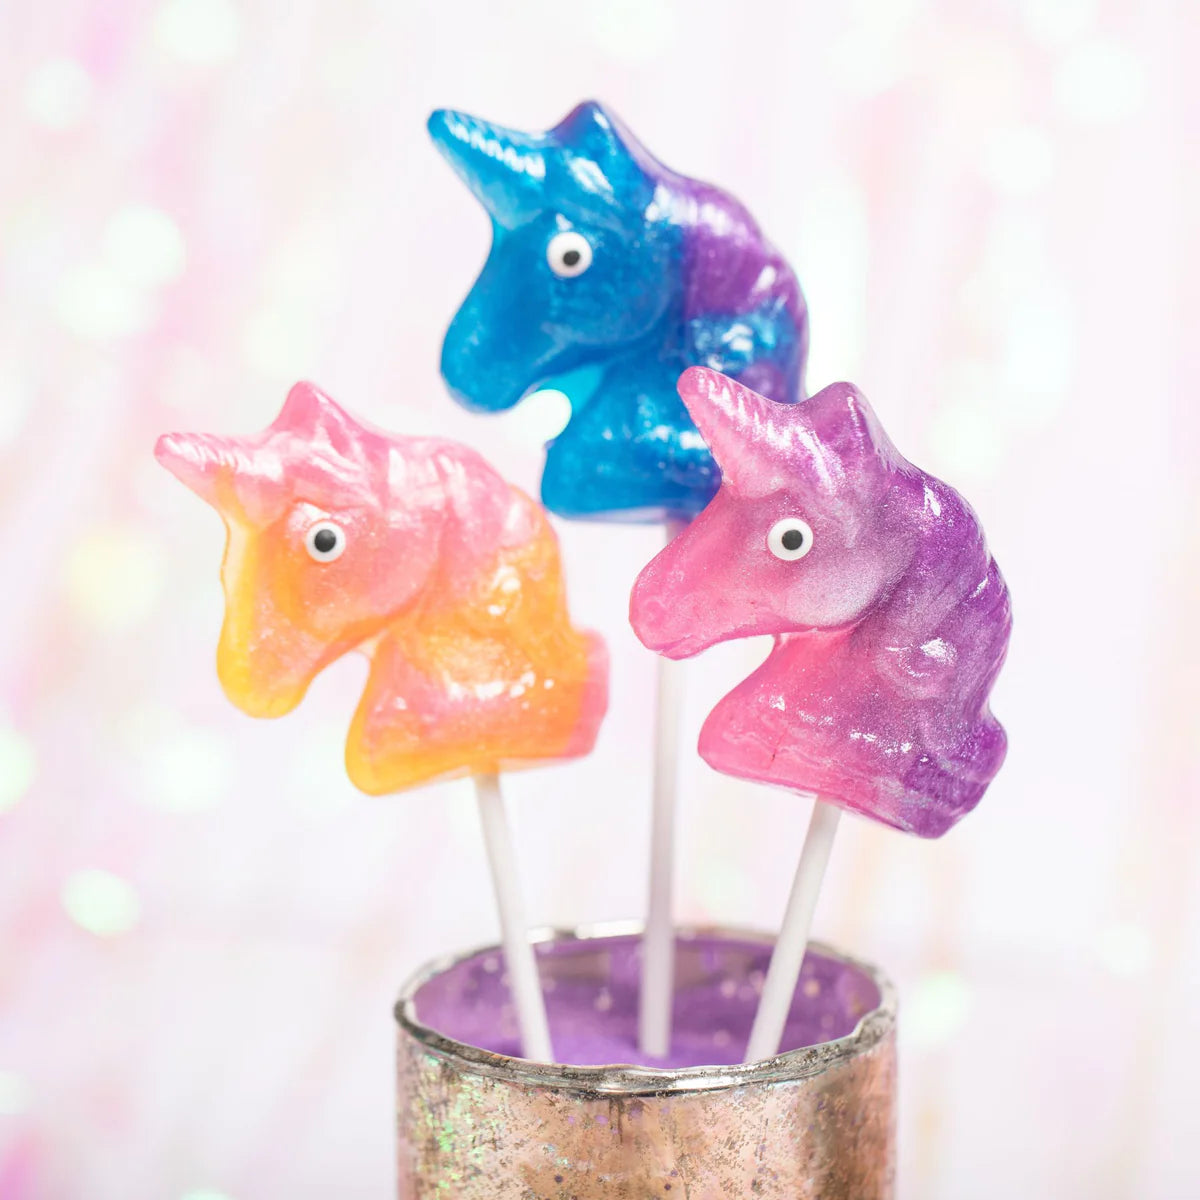 L&P Unicorn Lollipop - Assorted